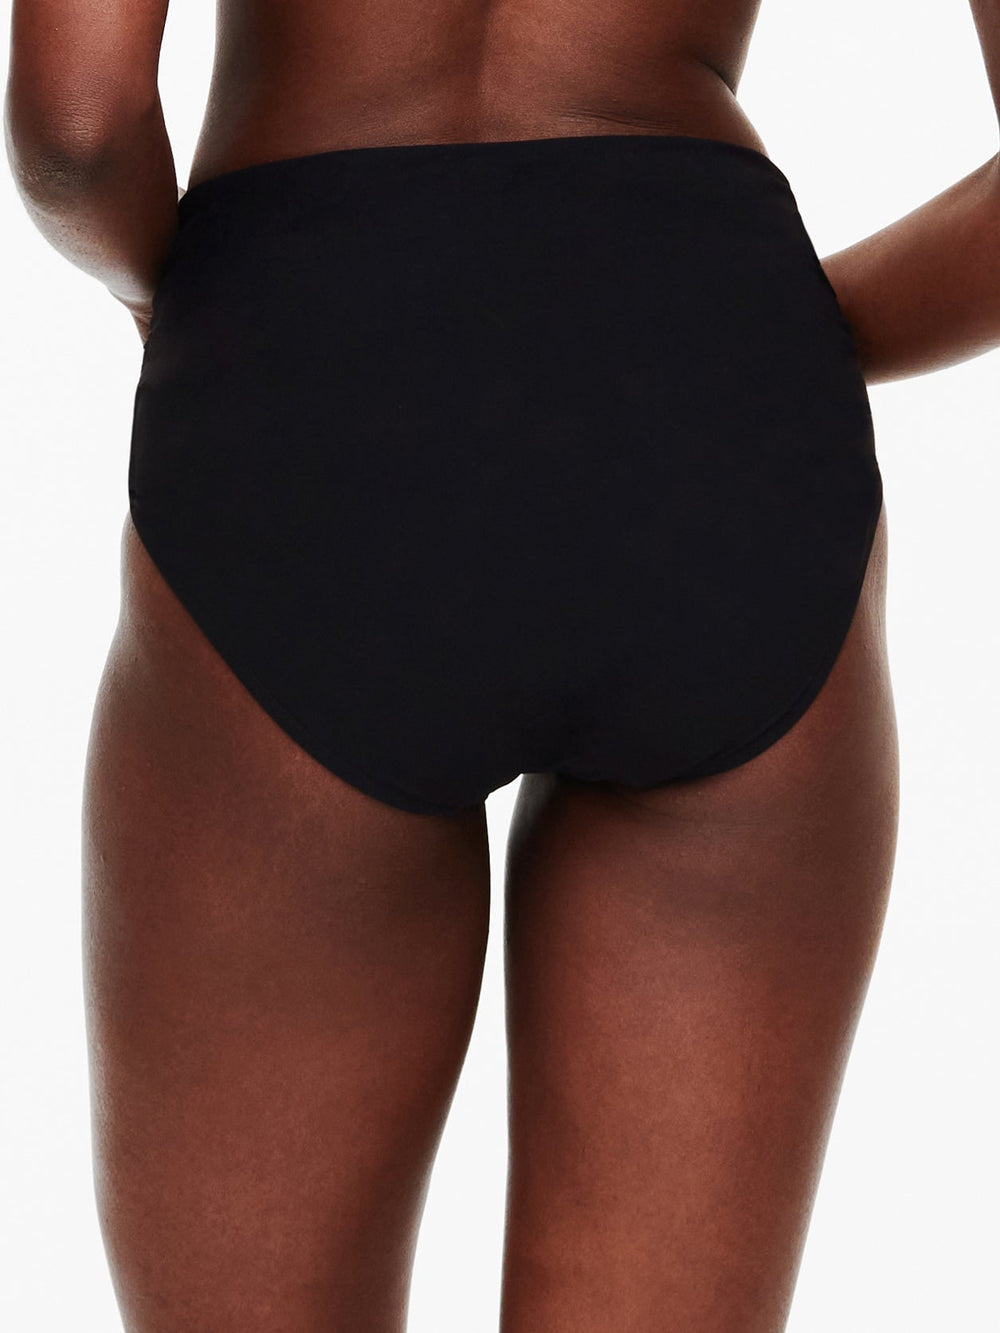 Chantelle Swimwear - Inspire Full Bikini Brief Black Full Bikini Brief Chantelle Swimwear 